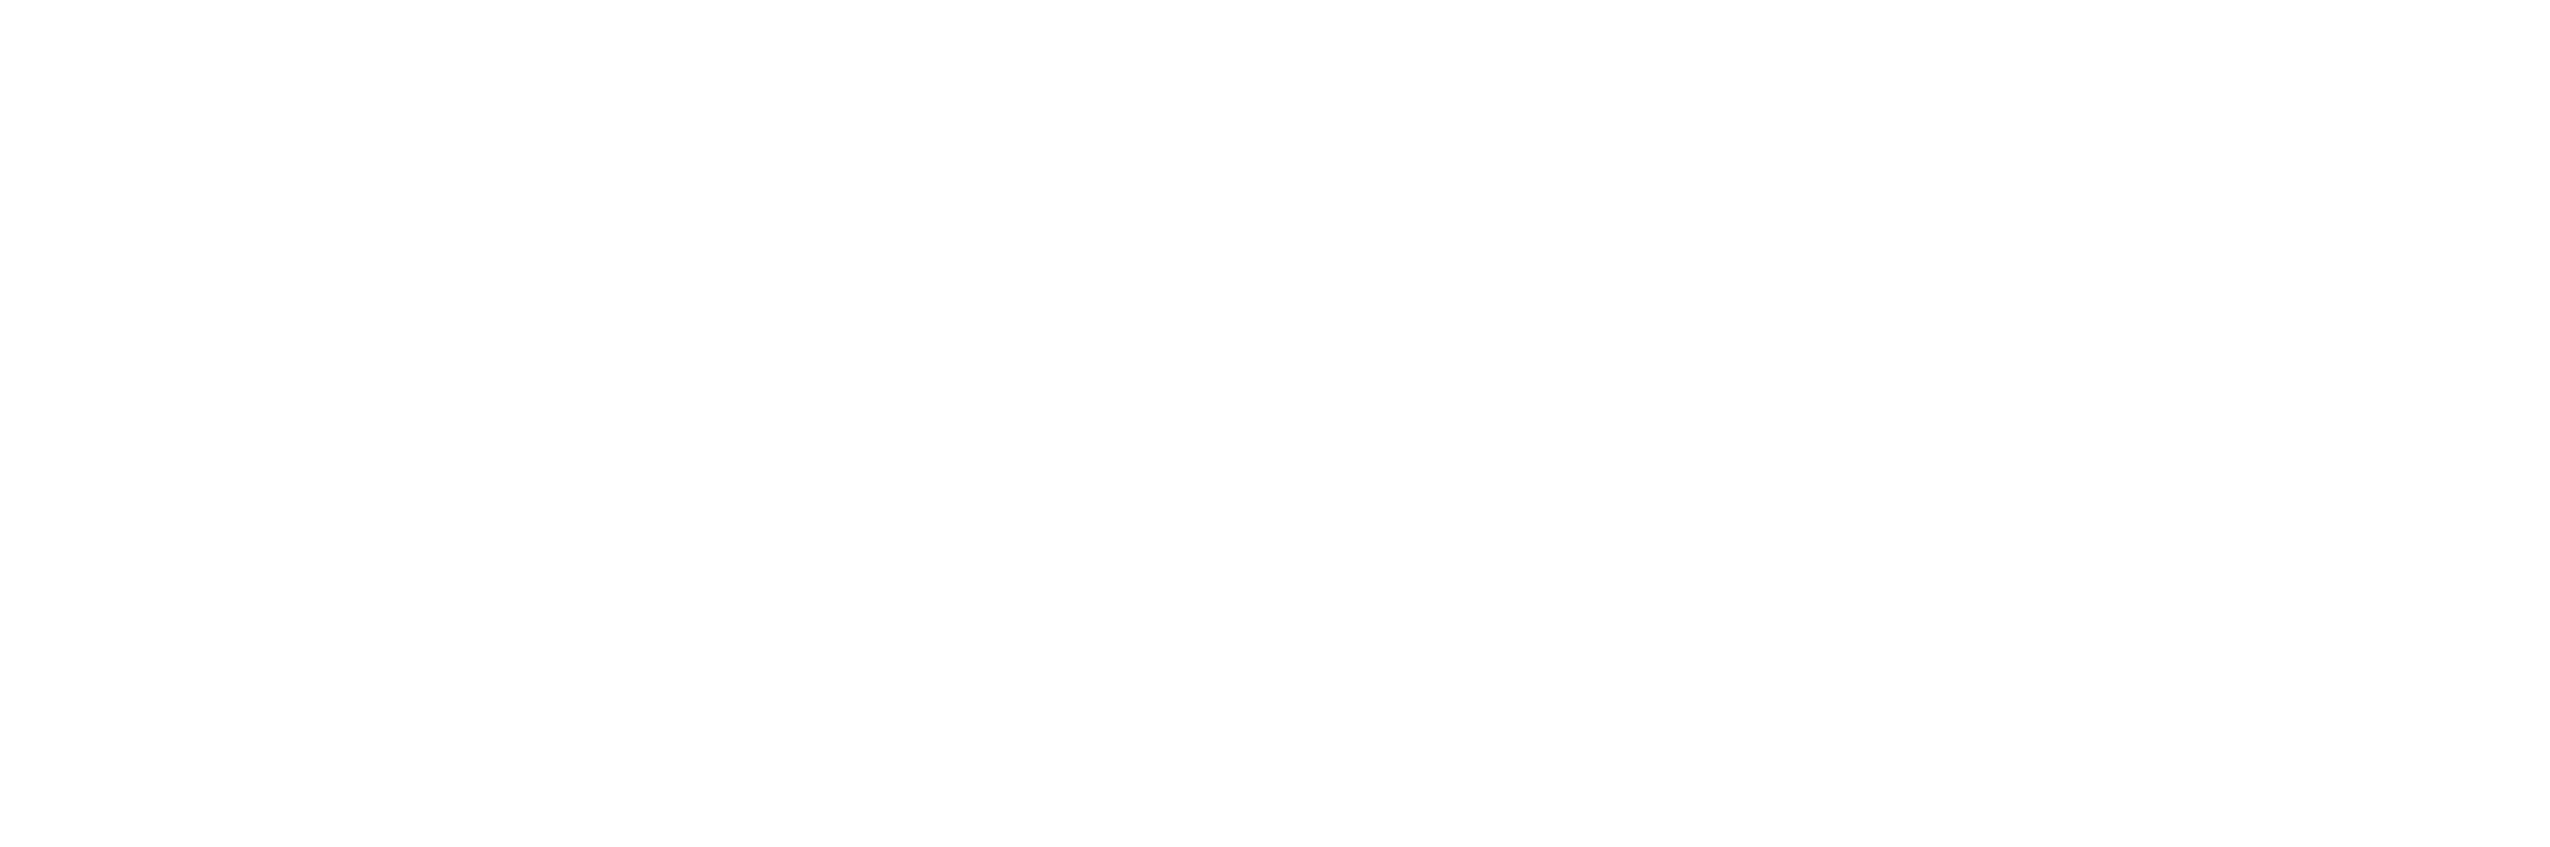 Max Healthcare Institute logo large for dark backgrounds (transparent PNG)